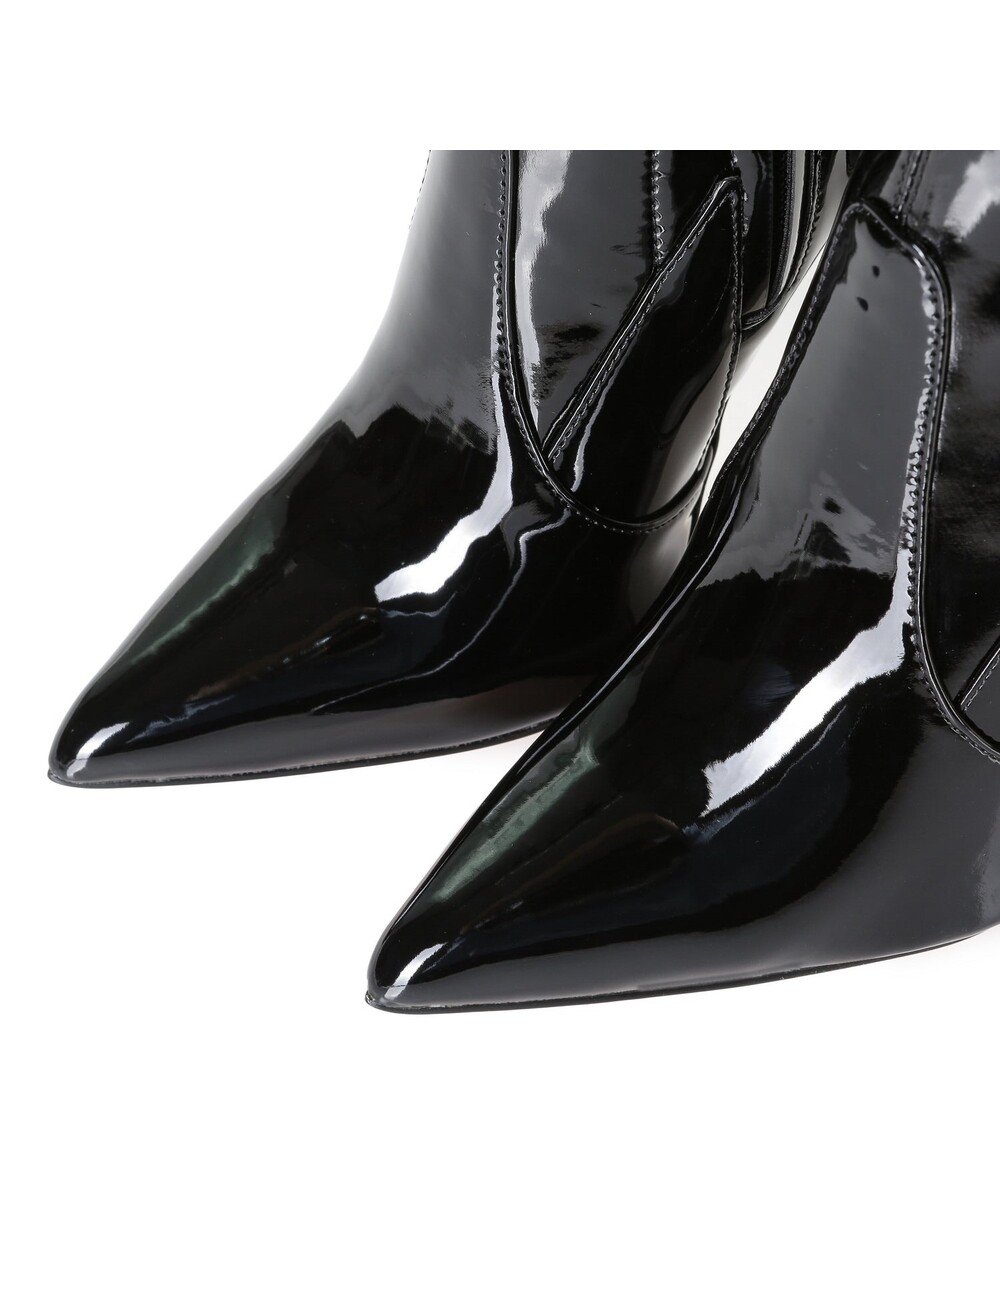 Giaro ARABELLA BLACK SHINY THIGH BOOTS Bootilicious style - Shoebidoo ...